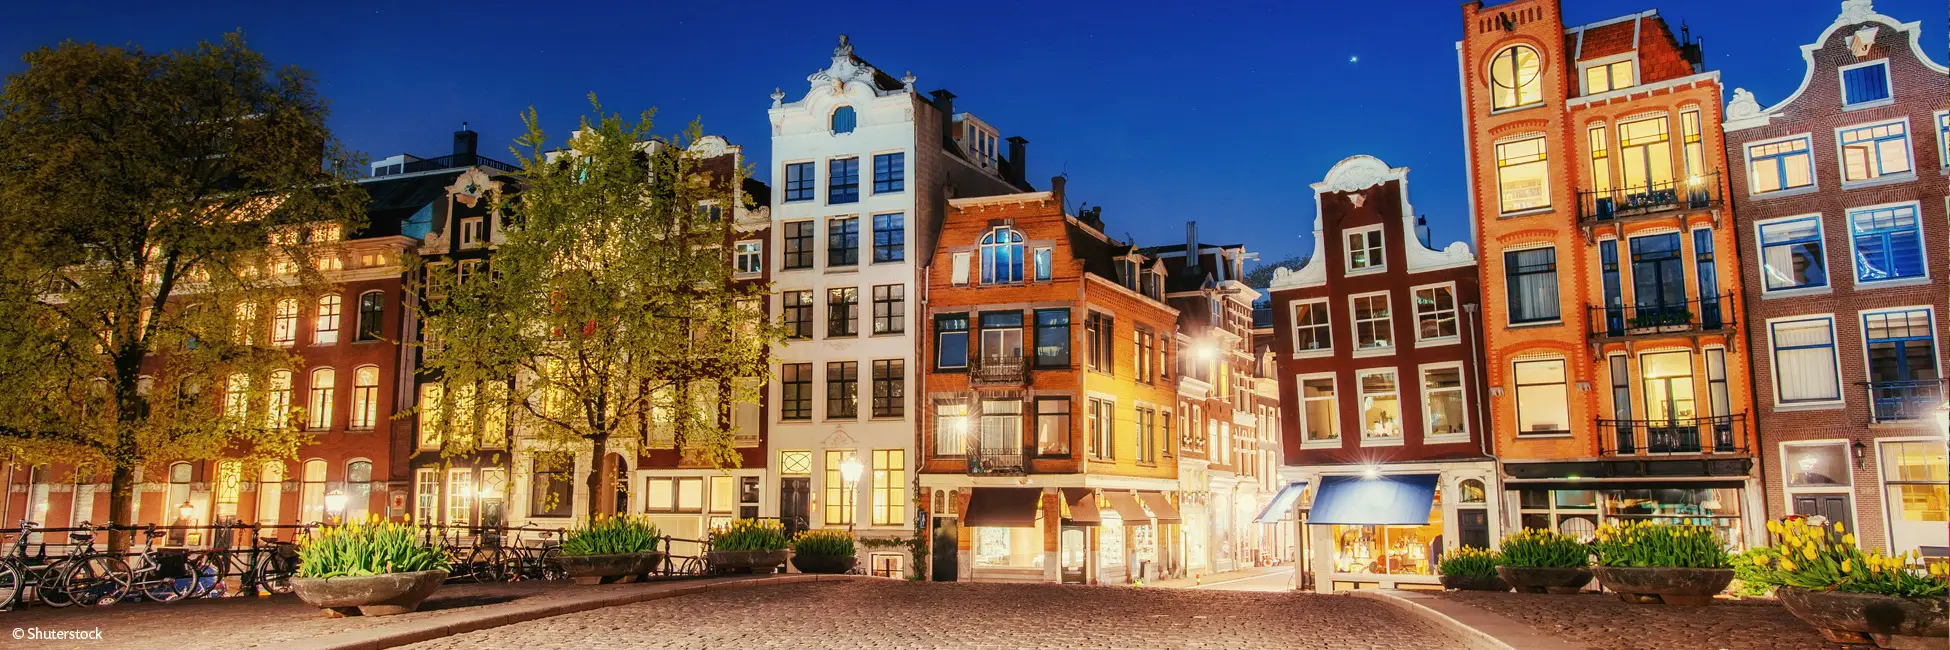 Slider appartements typiques d'Amsterdam